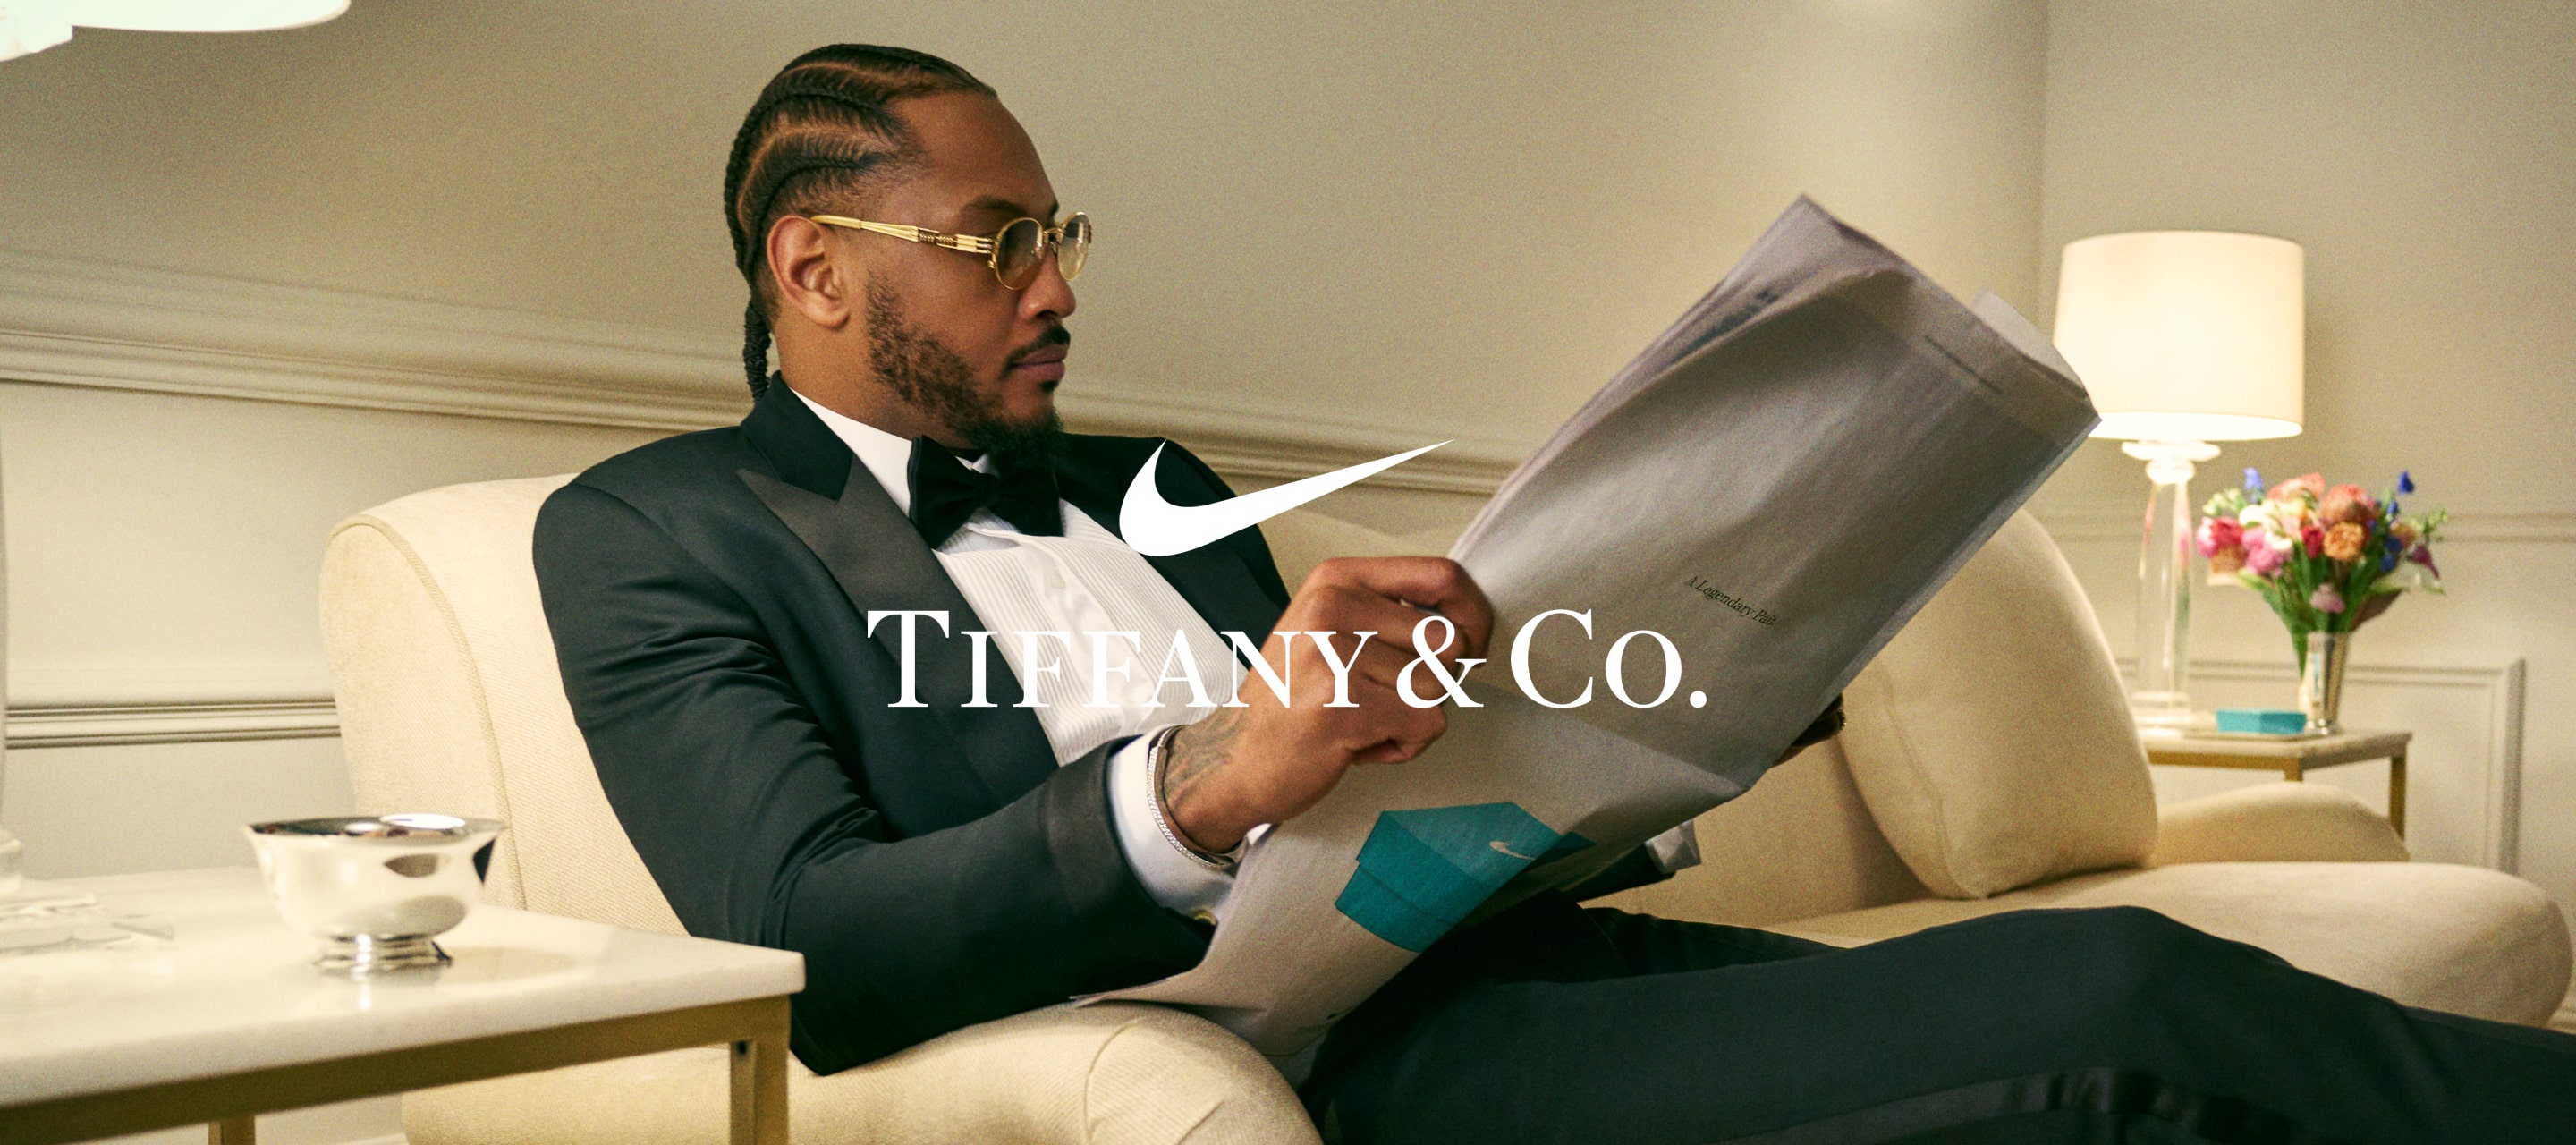 Tiffany & Co. x Nike